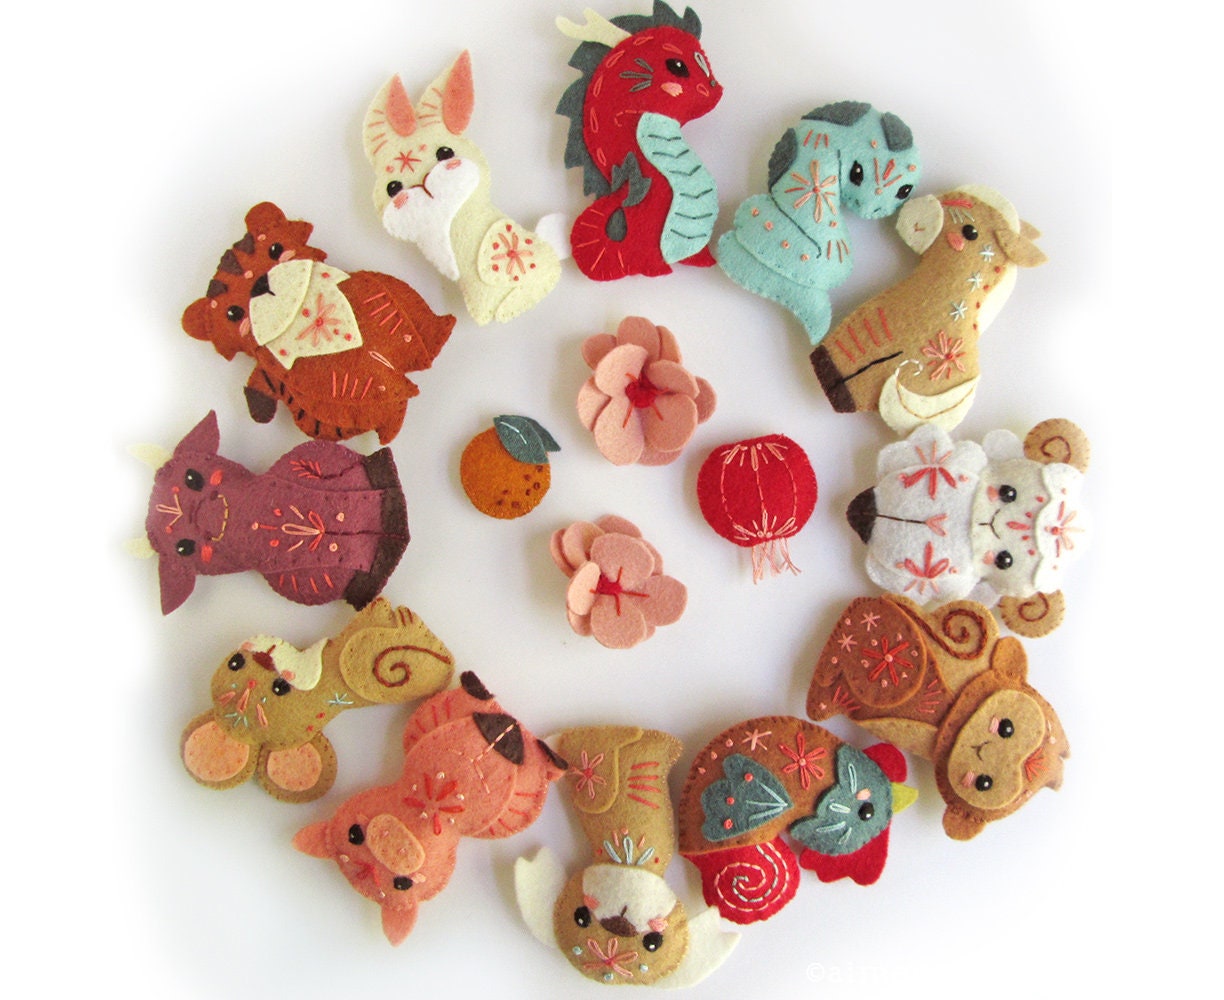 12 Chinese Zodiac, Lunar New Year felt animals sewing patterns